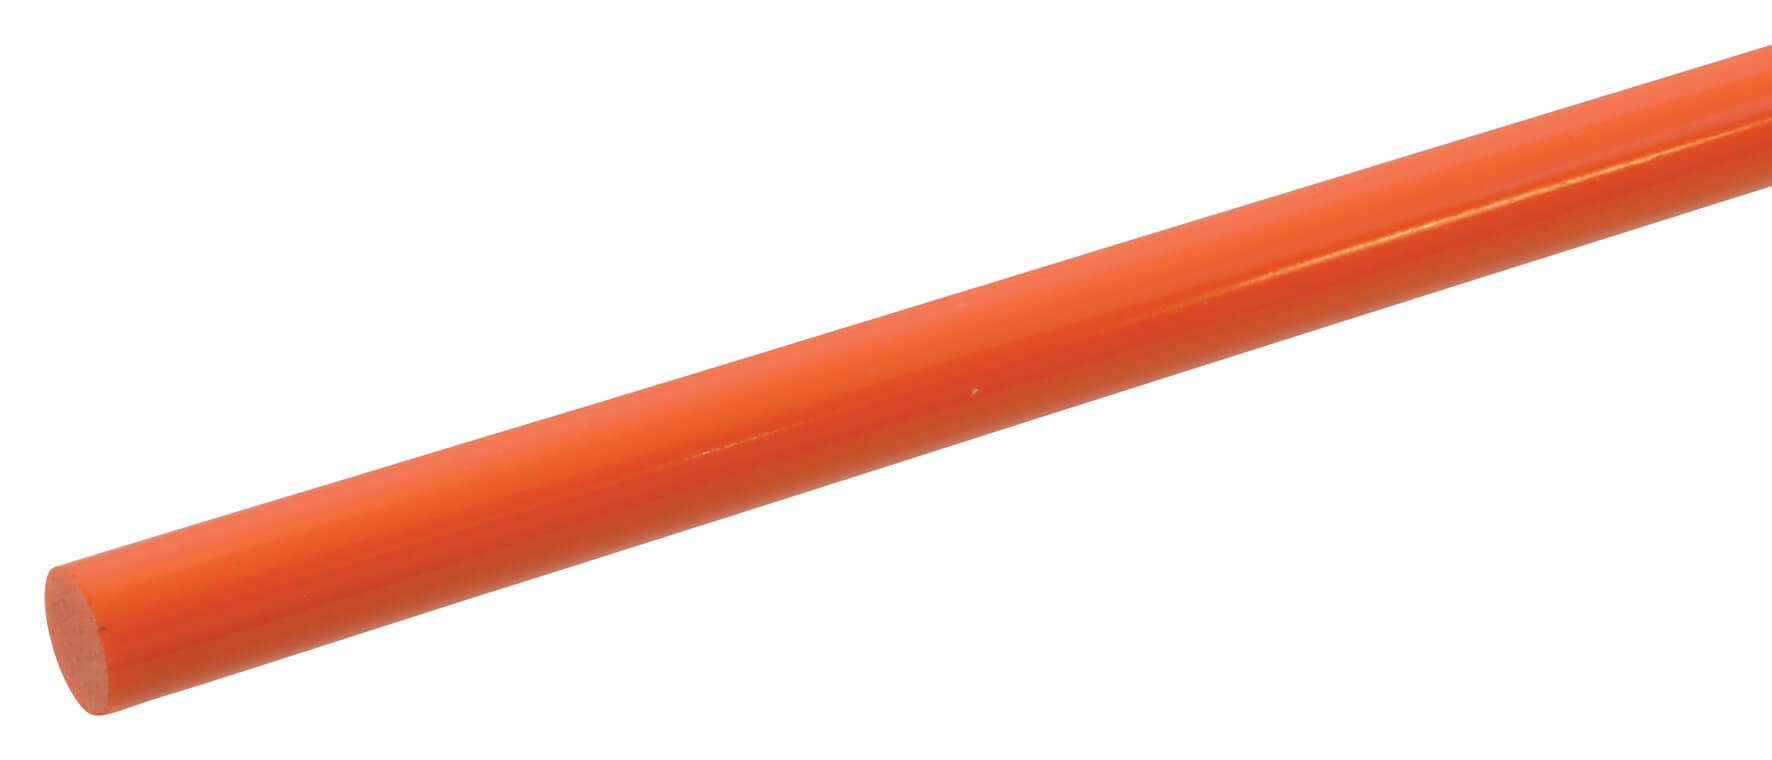 Acrylic Rod 6.4mm x 610mm - Solid Orange